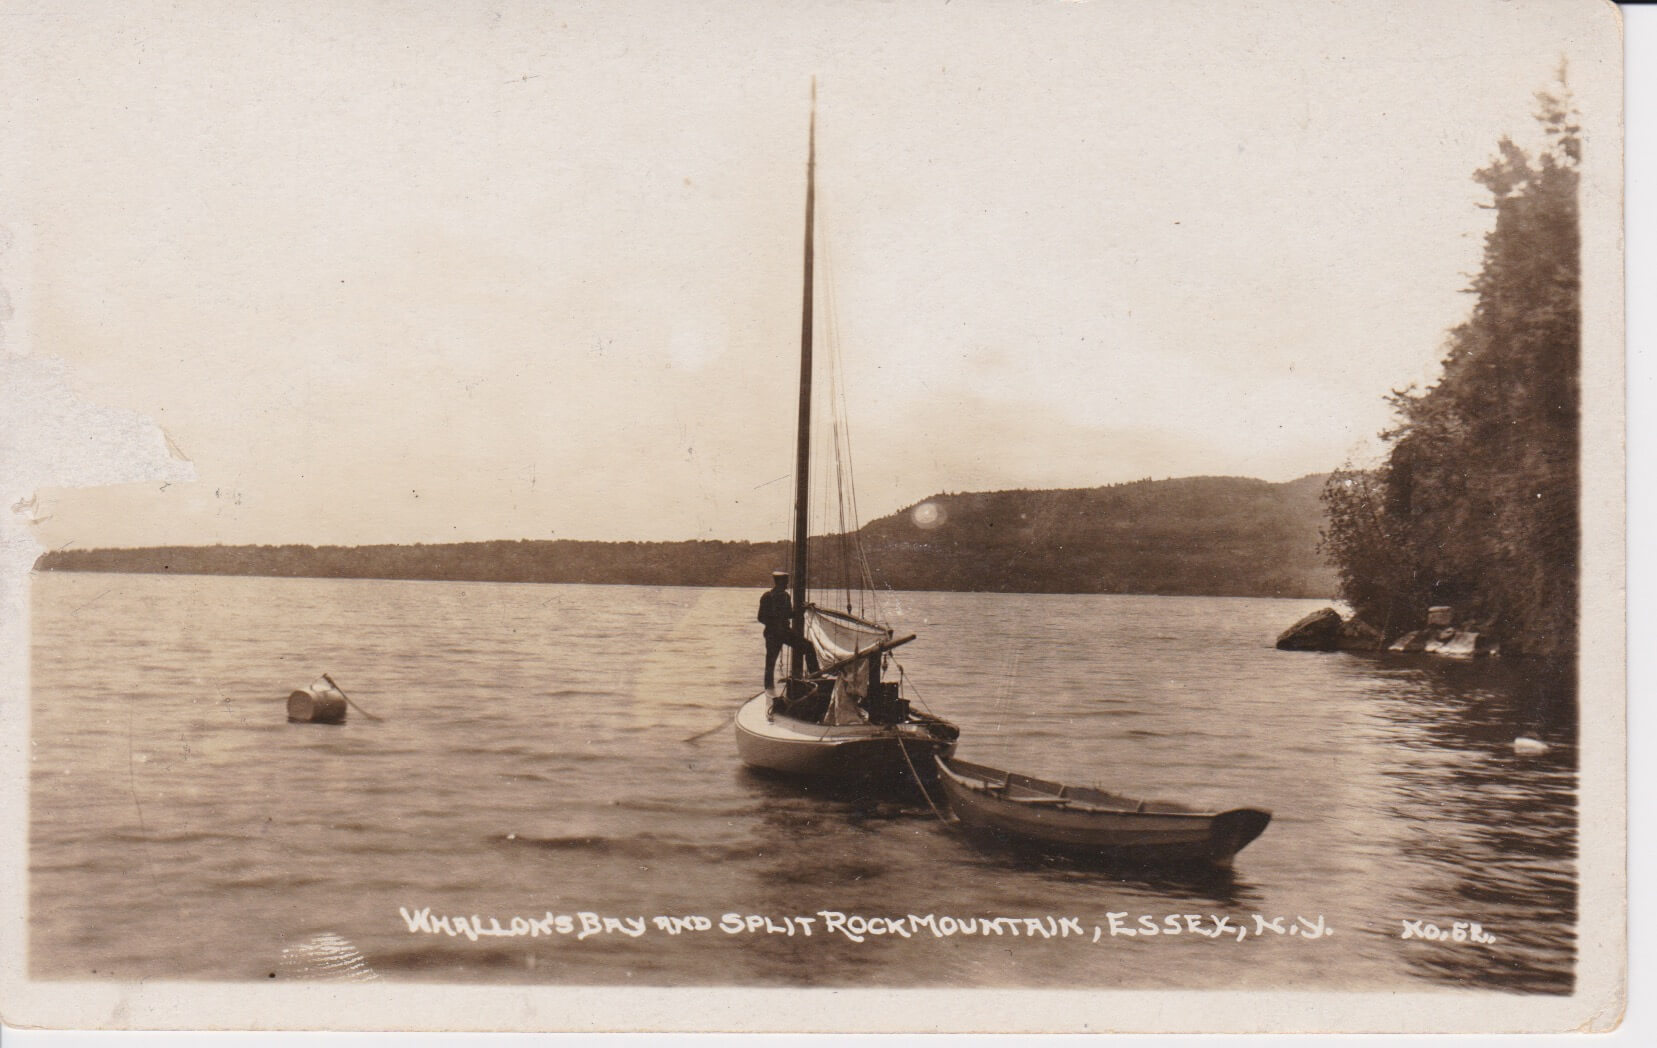 Vintage Postcard: Whallons Bay and Split Rock Mountain